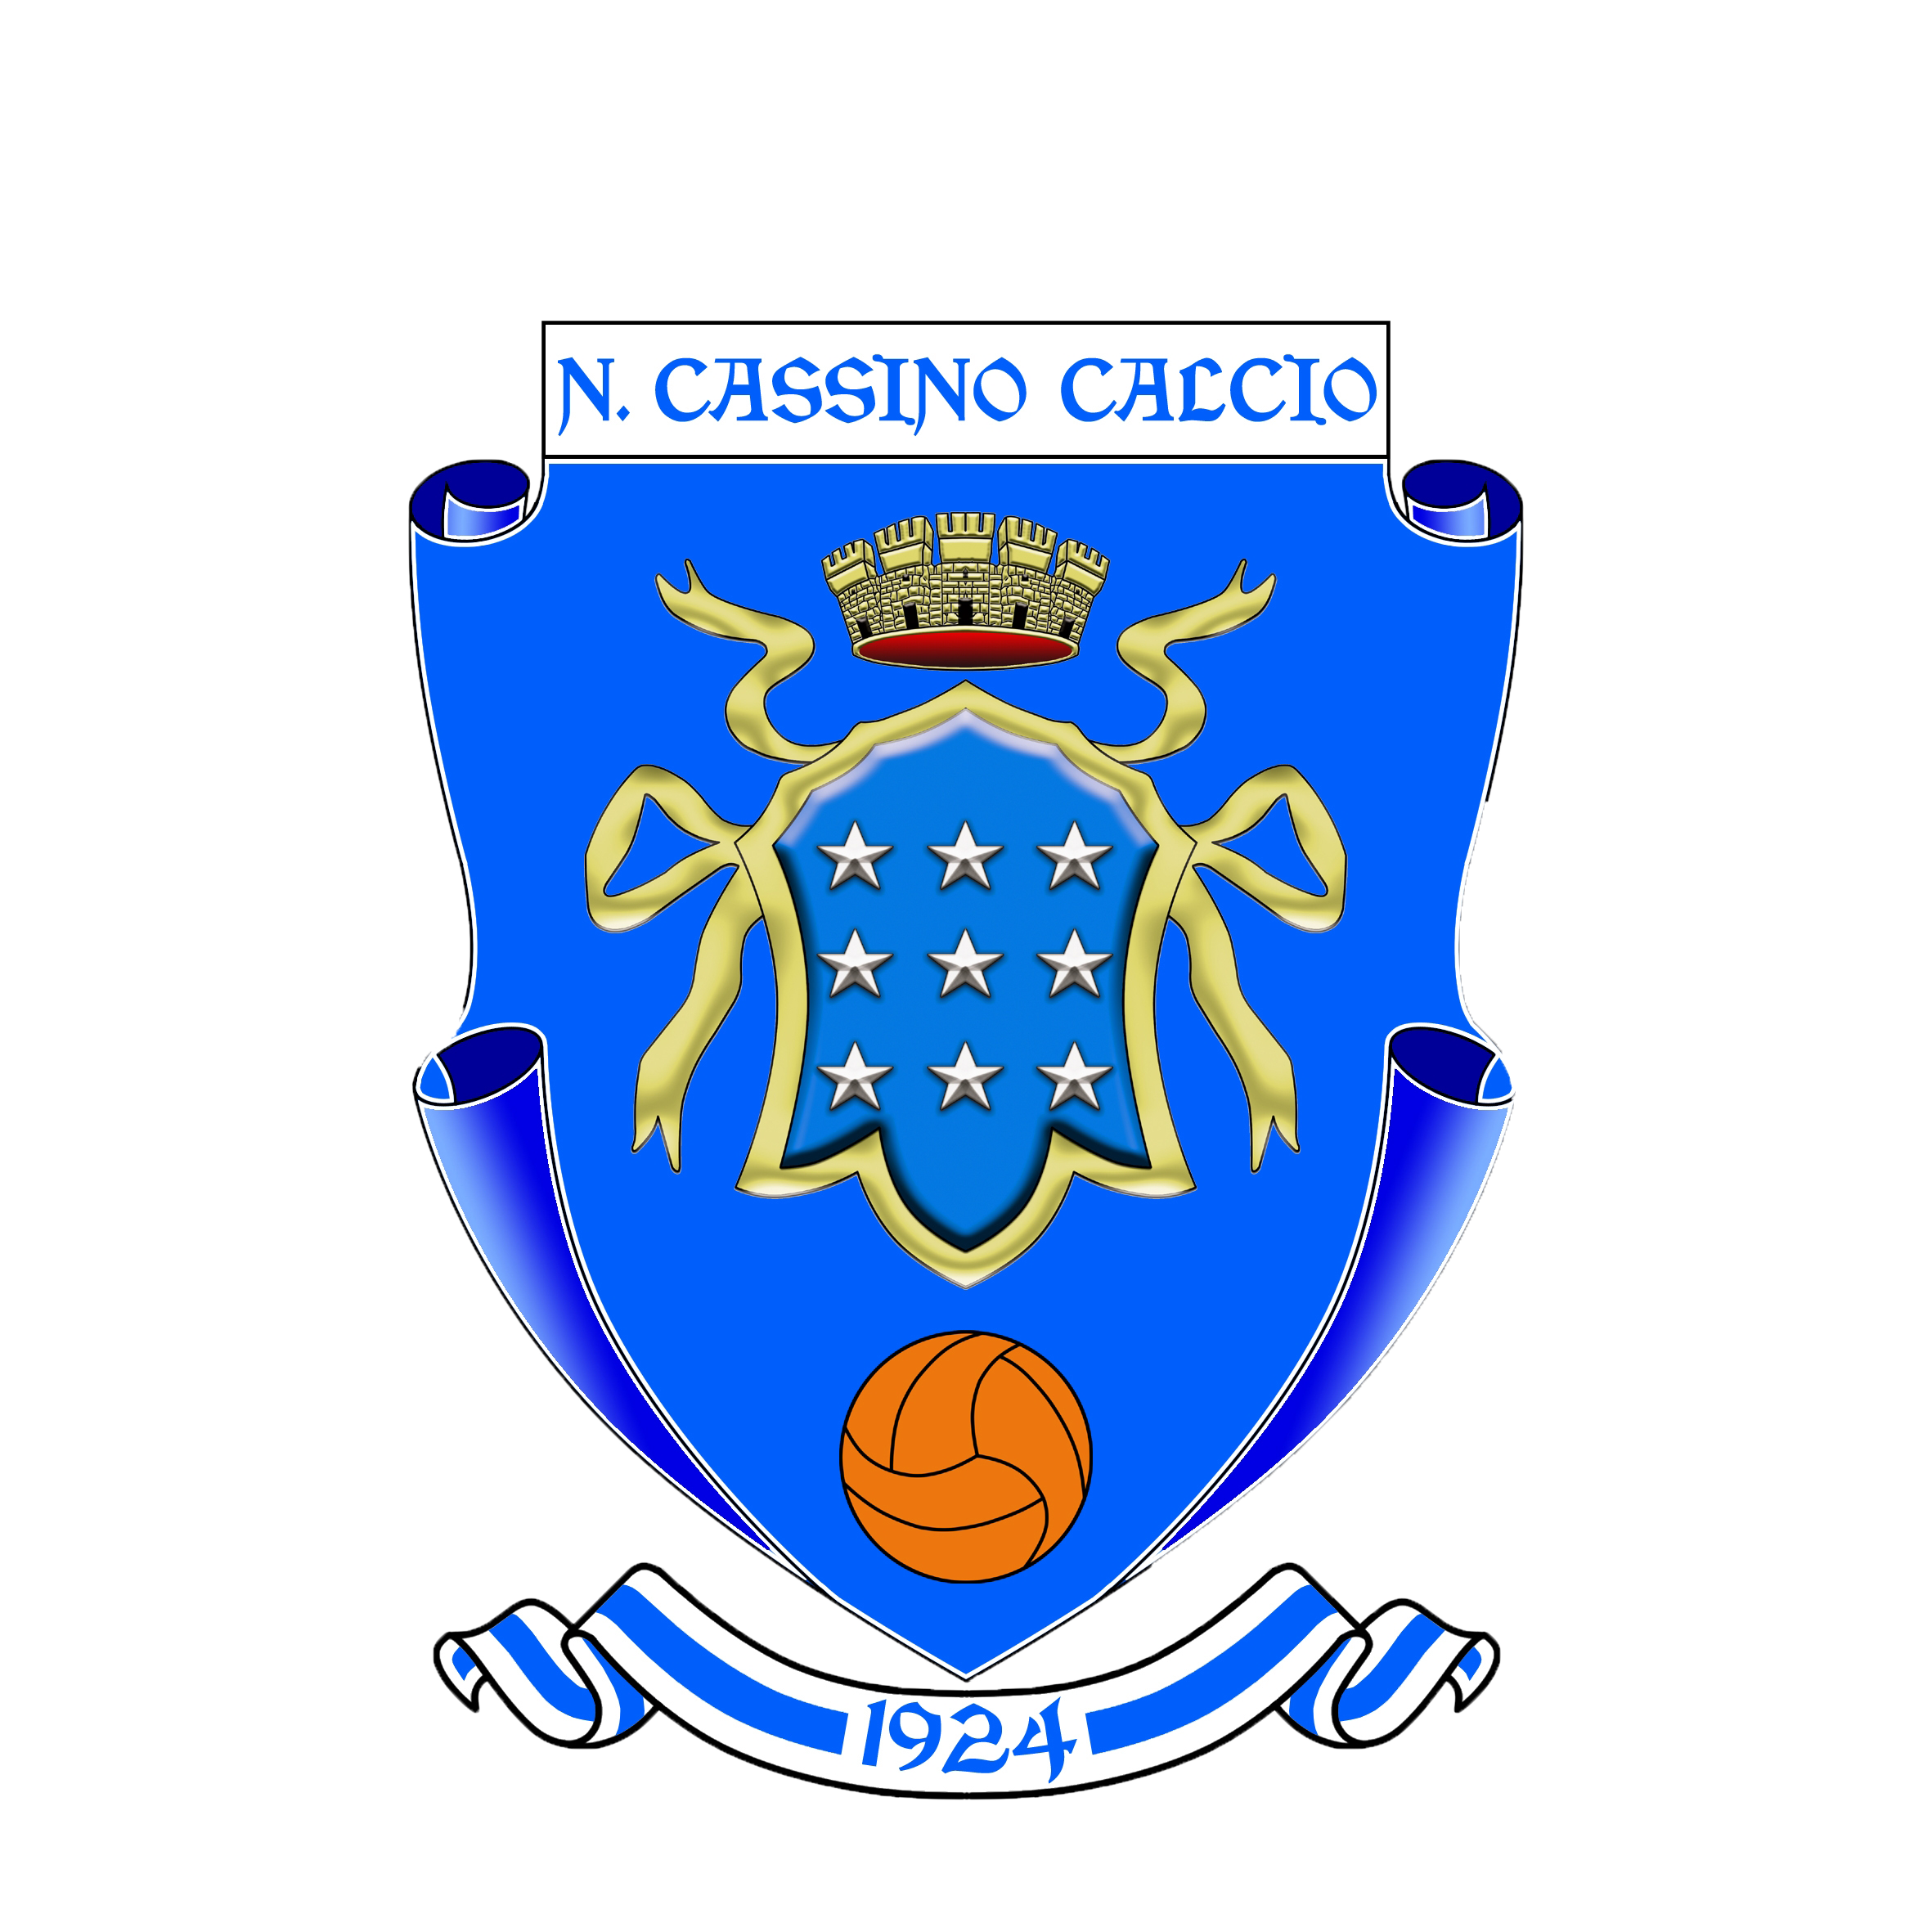 CASSINO CALCIO